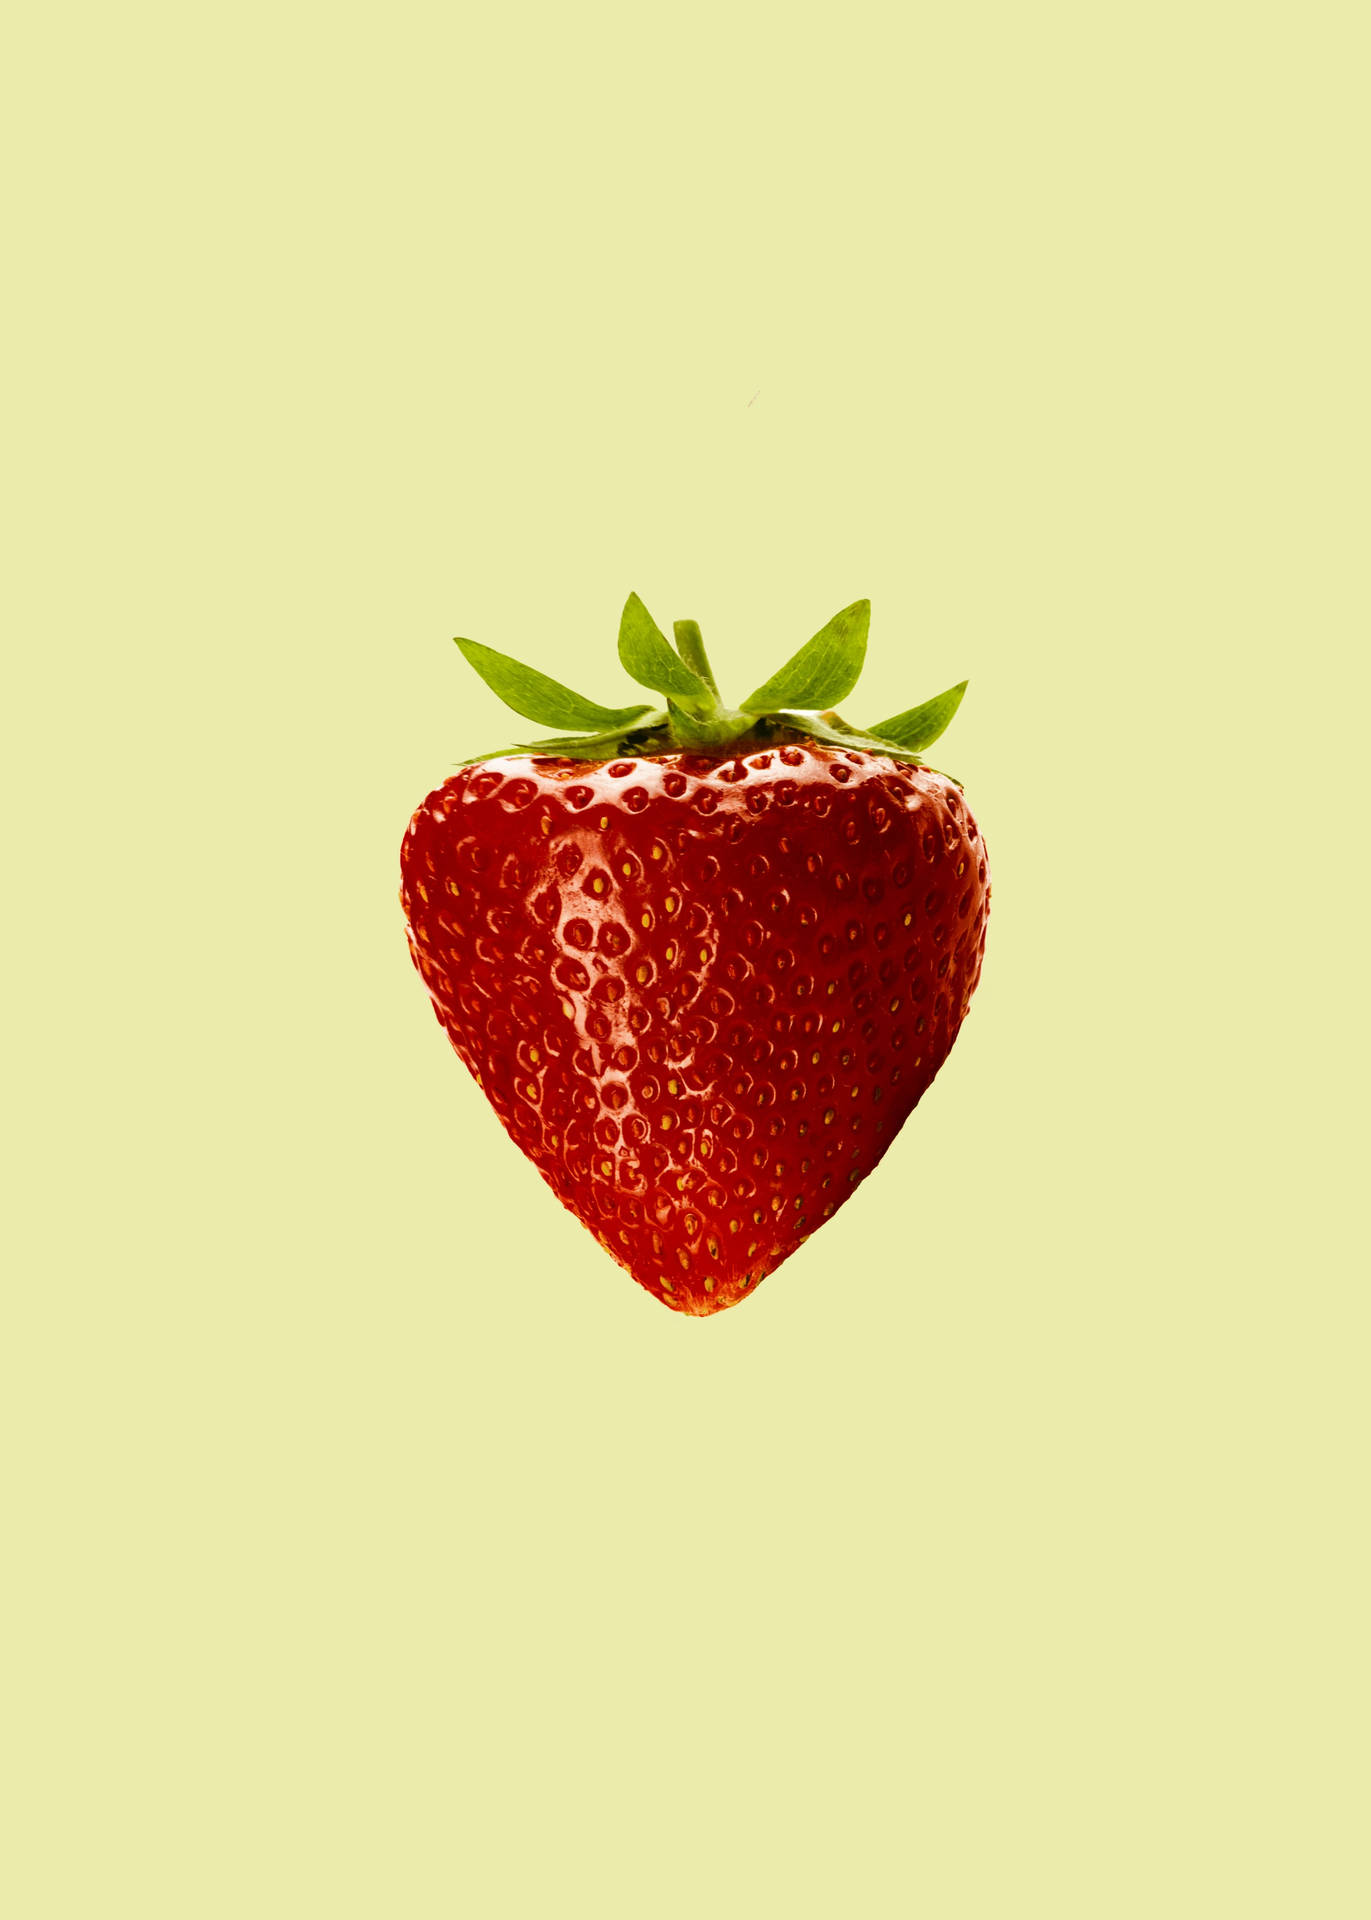 Strawberry In Beige